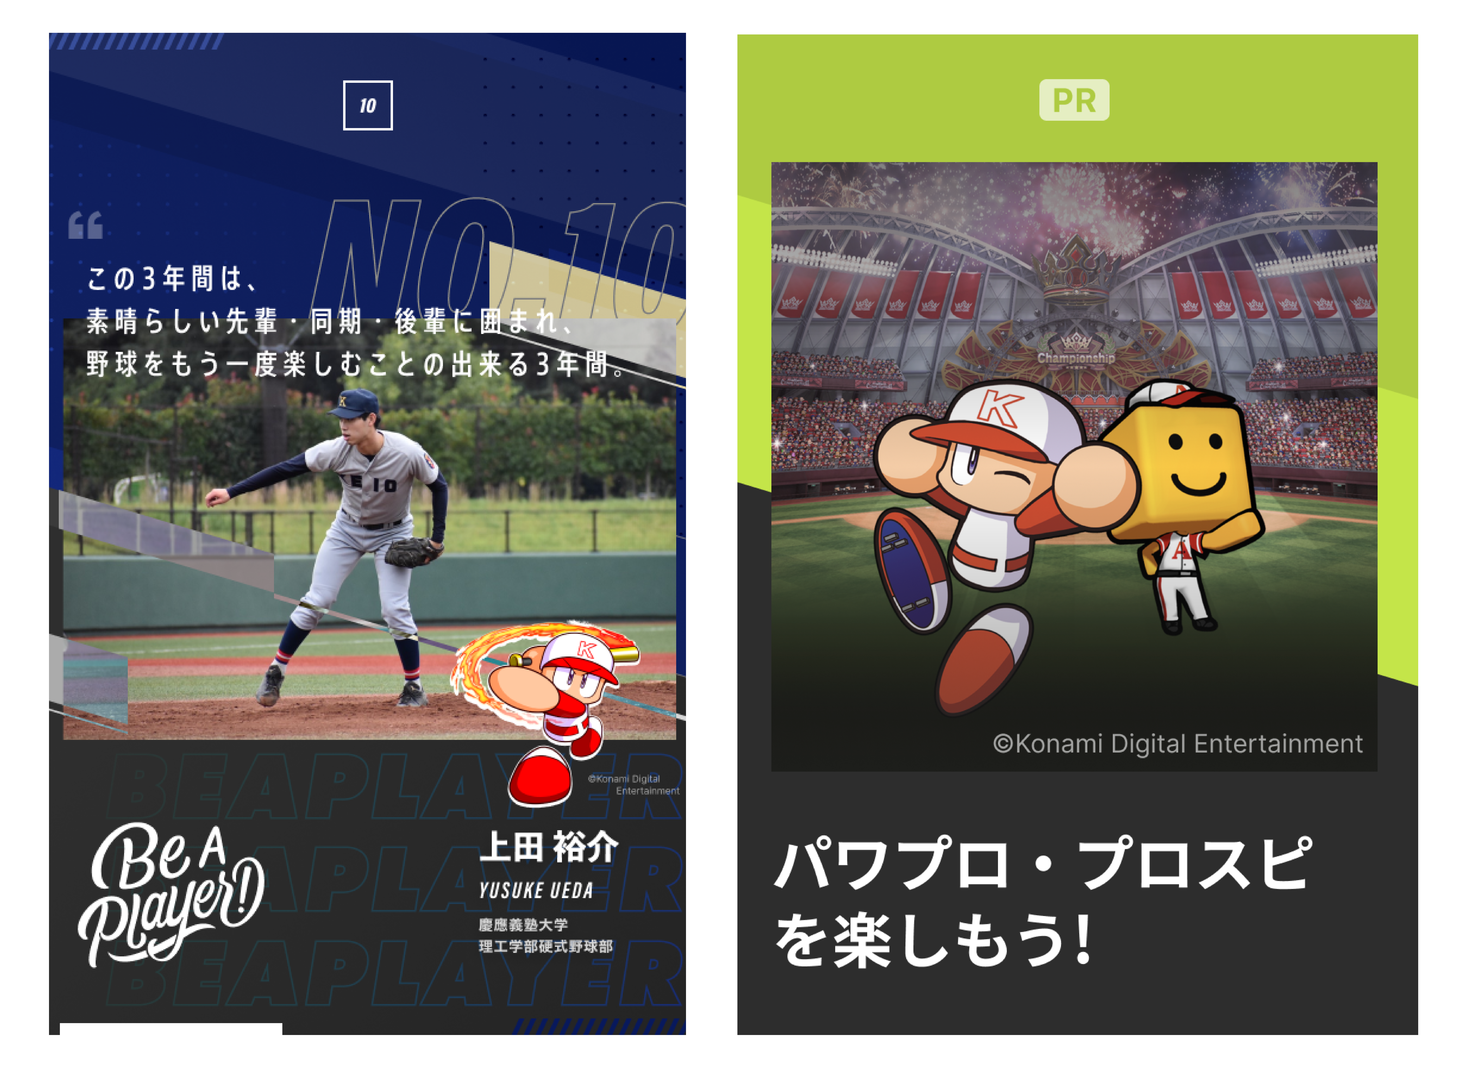 Player パワプロ プロスピa 東京六大学理工系硬式野球連盟とパワプロ プロスピaを通じたコミュニケーション連携 Ookamiのプレスリリース